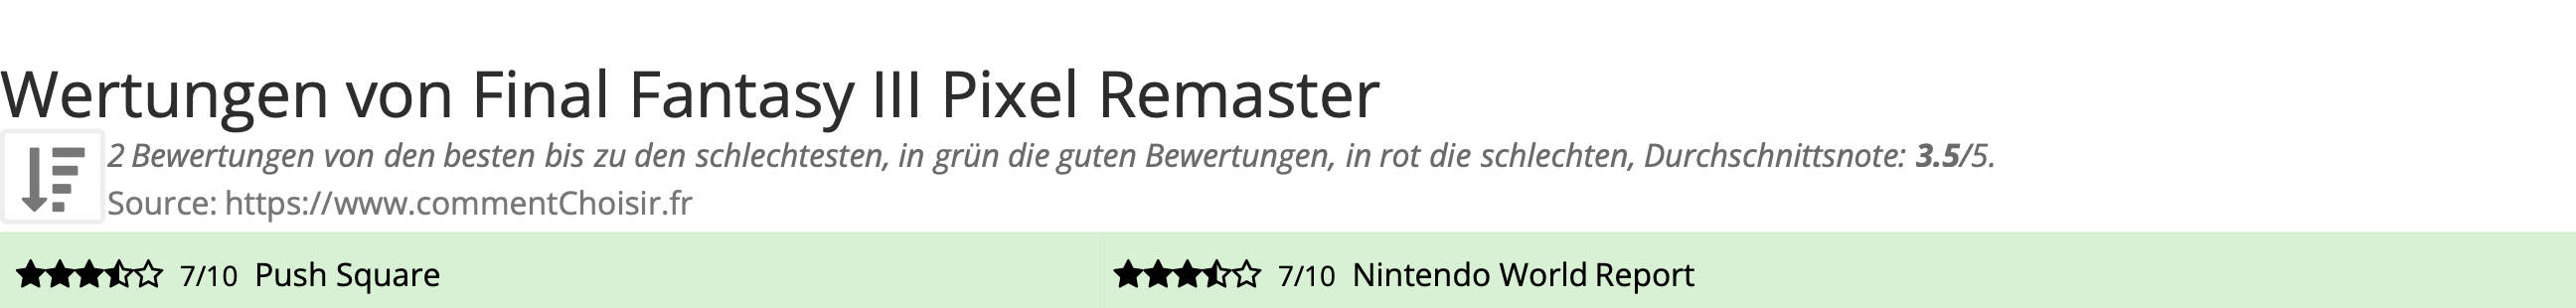 Ratings Final Fantasy III Pixel Remaster